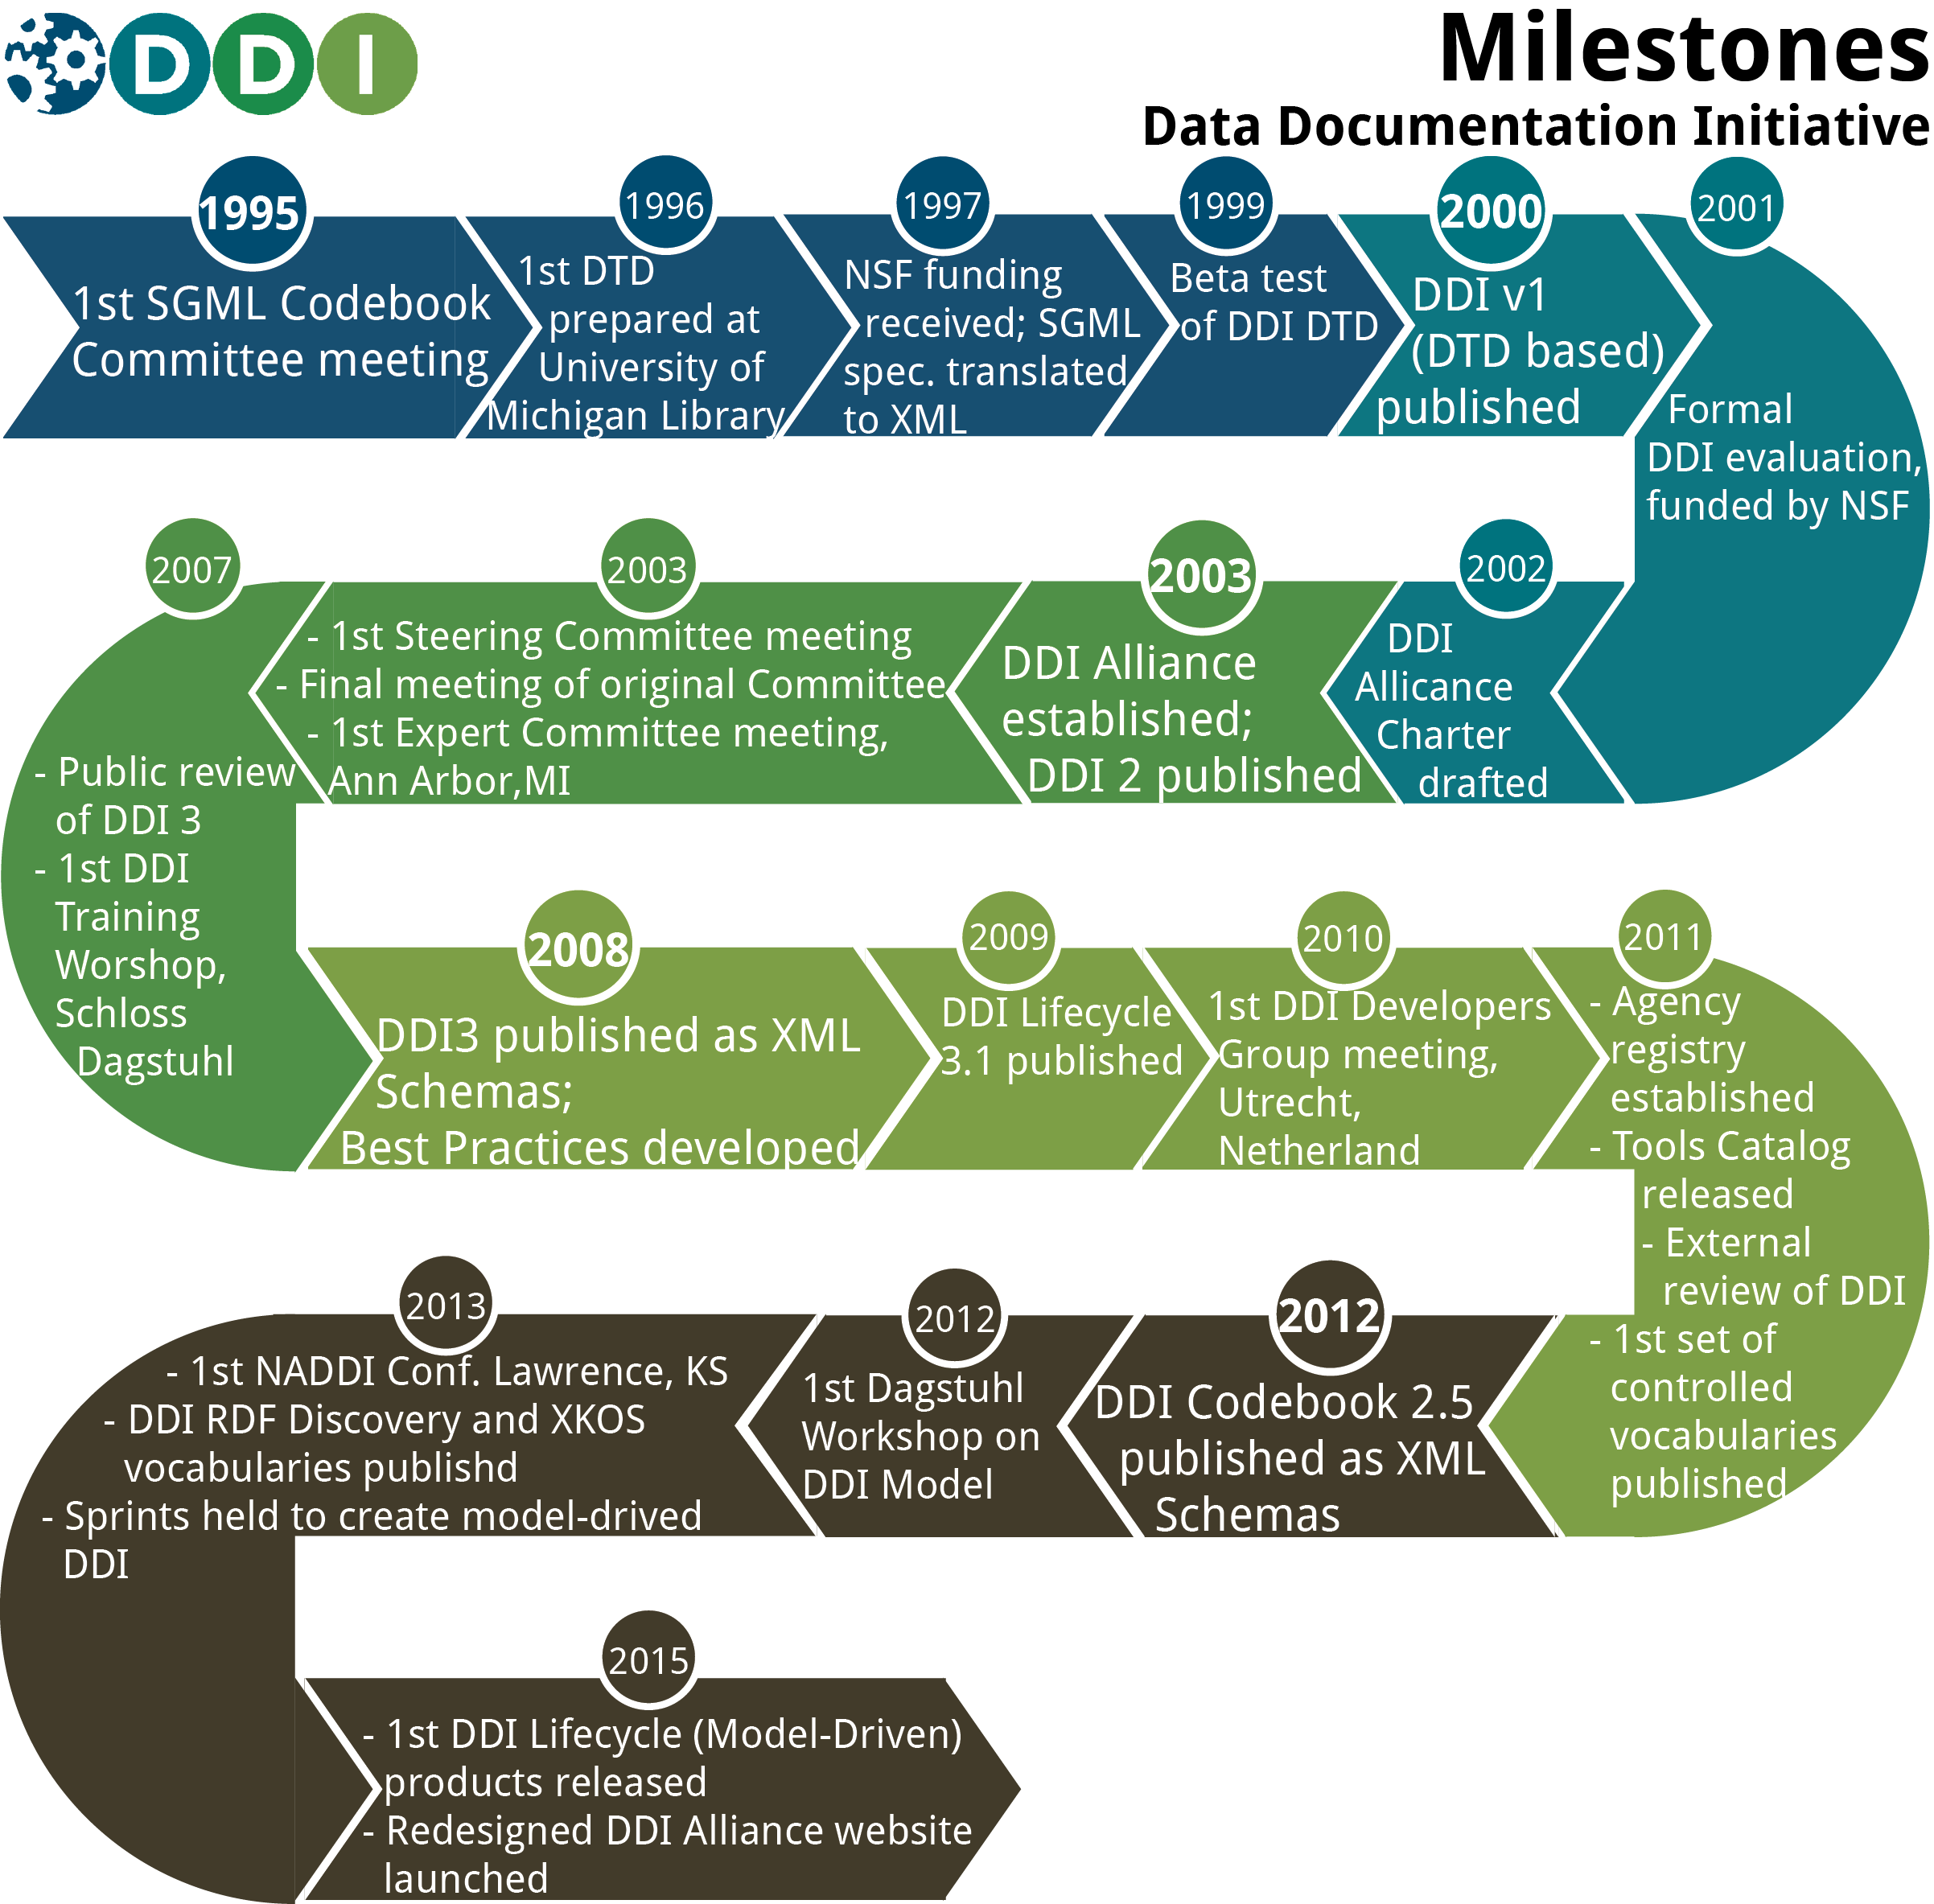 DDI milestones